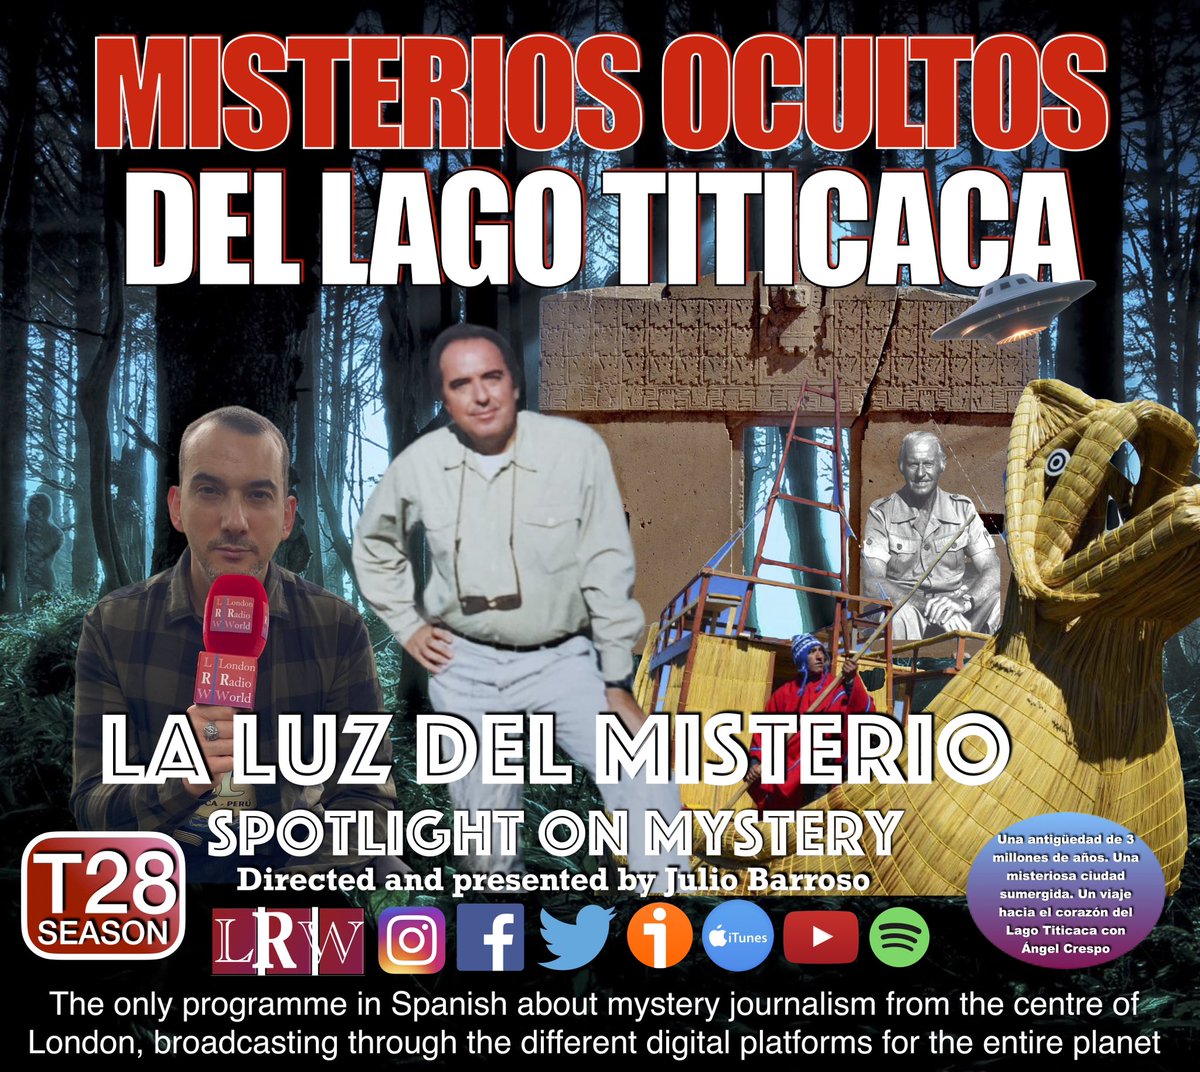 From London Temporada 28:

Misterios ocultos del Lago Titicaca con Ángel Crespo

go.ivoox.com/rf/104445105 #baseovni #lagotiticaca #angelcrespo #carrosdefuego #juliobarroso #perumagico